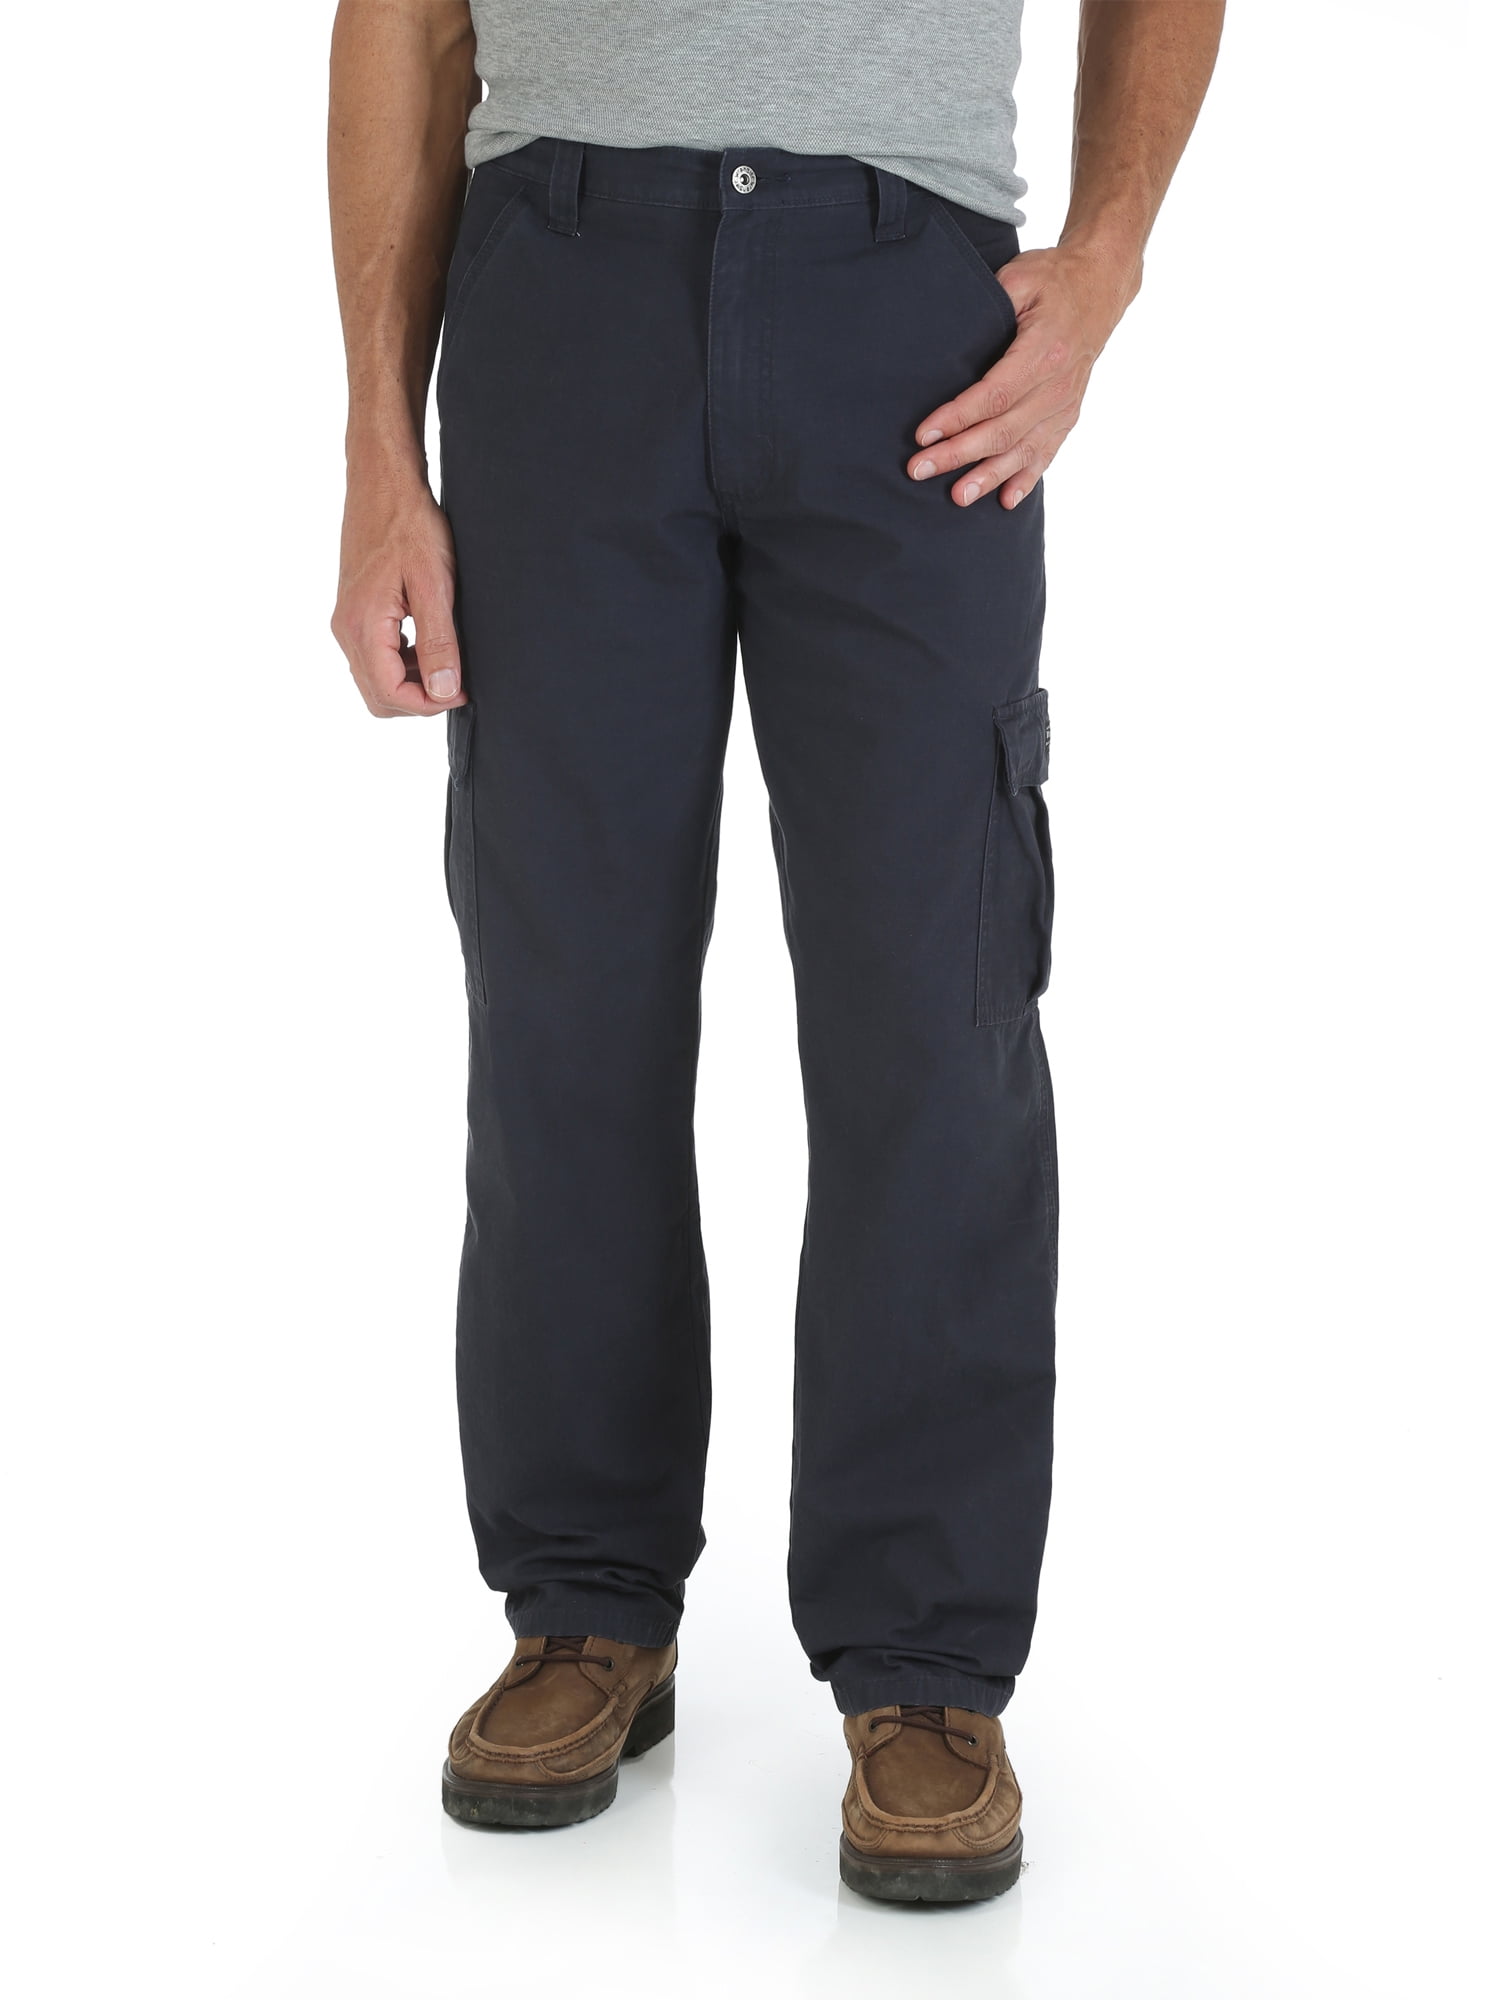 Durable Black Cargo Pants Chefs Garden Industrial Workwear Multi Pocket Trousers 